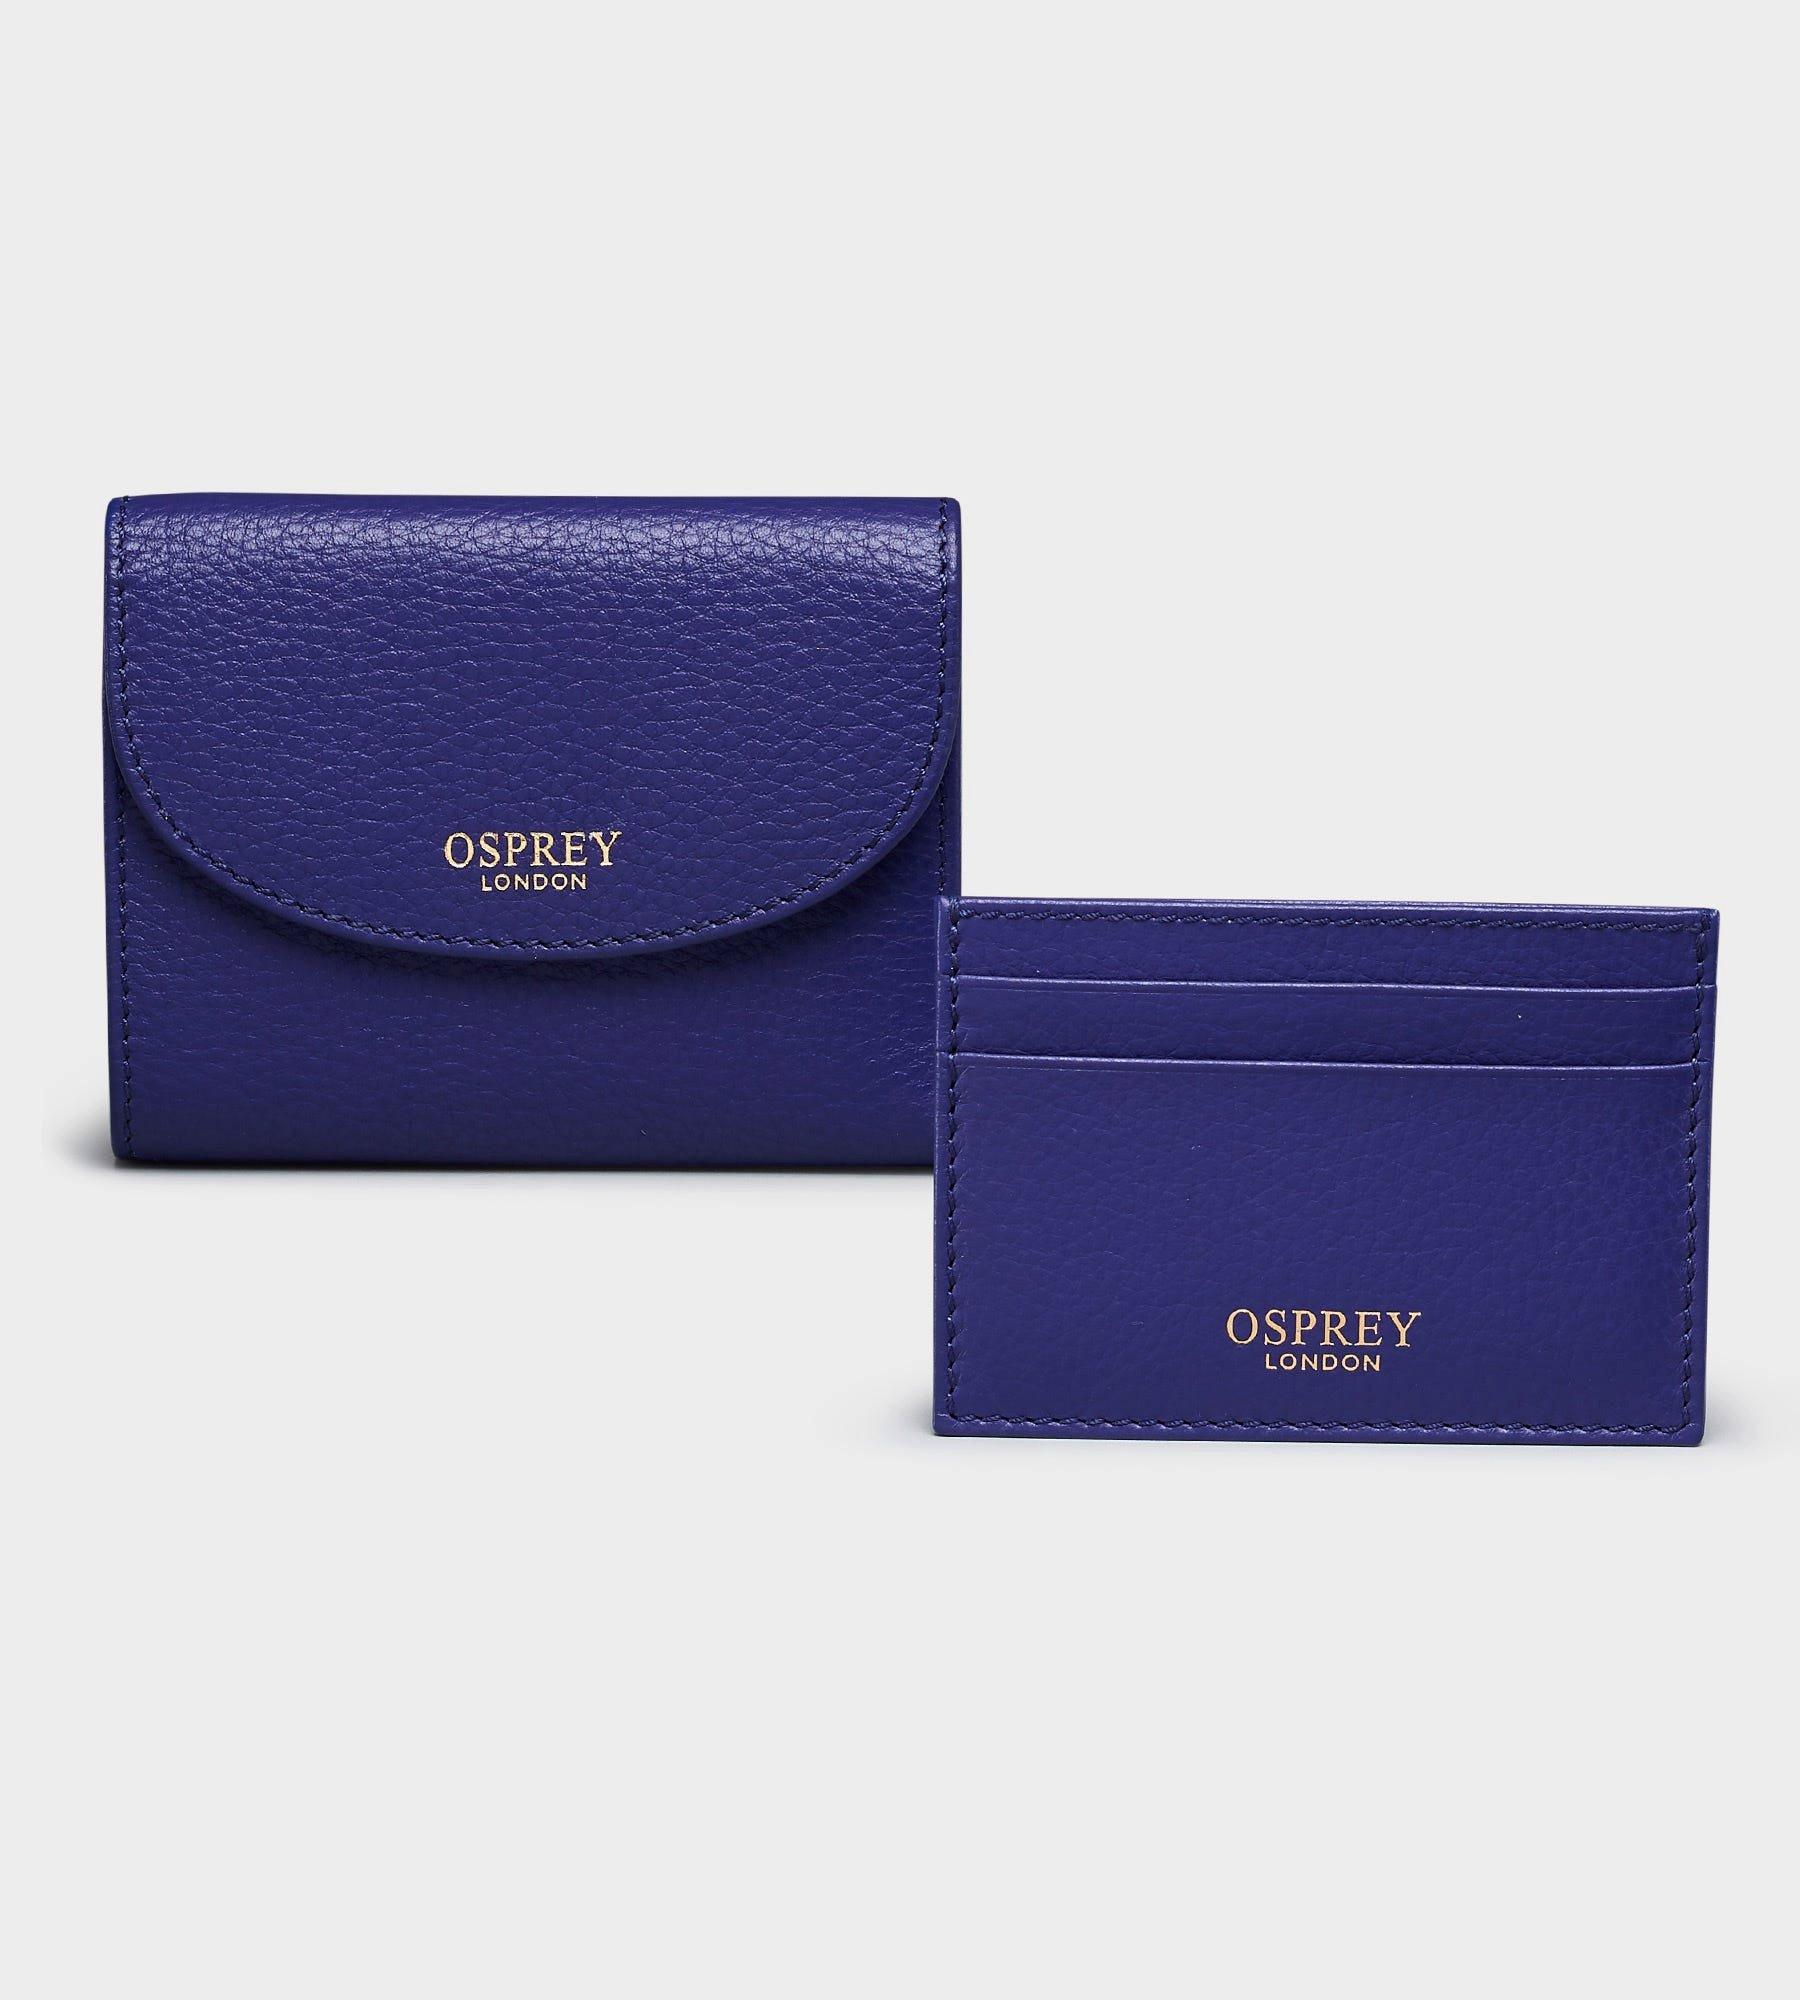 Osprey handbag | Handbags, Purses & Women's Bags for Sale | Gumtree